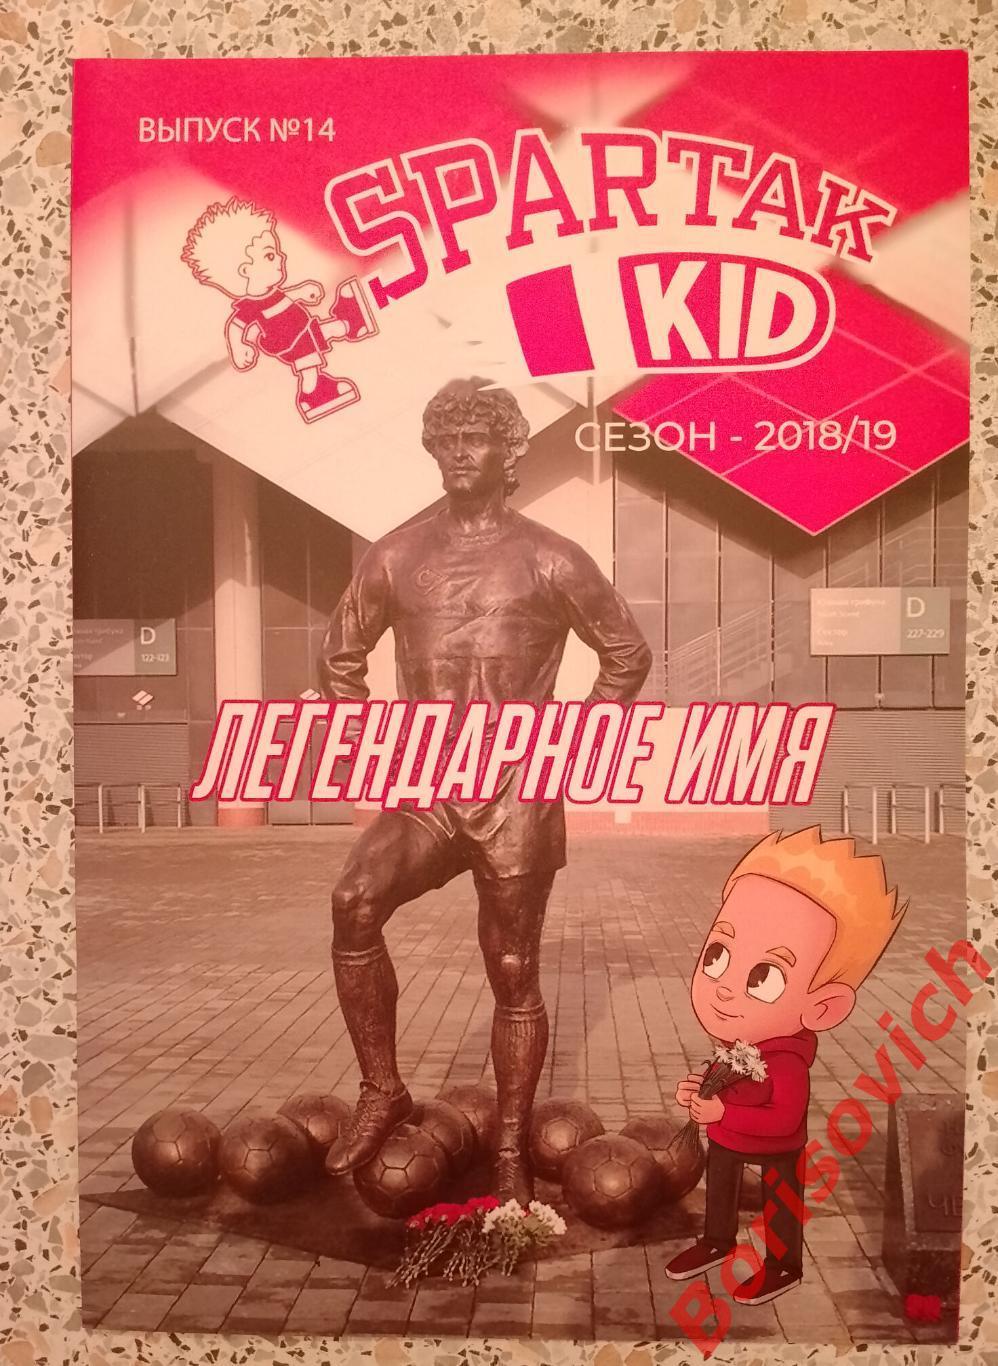 Комикс Спартак Spartak Kid N14 Сезон 2018/19 ЛЕГЕНДАРНОЕ ИМЯ. 7